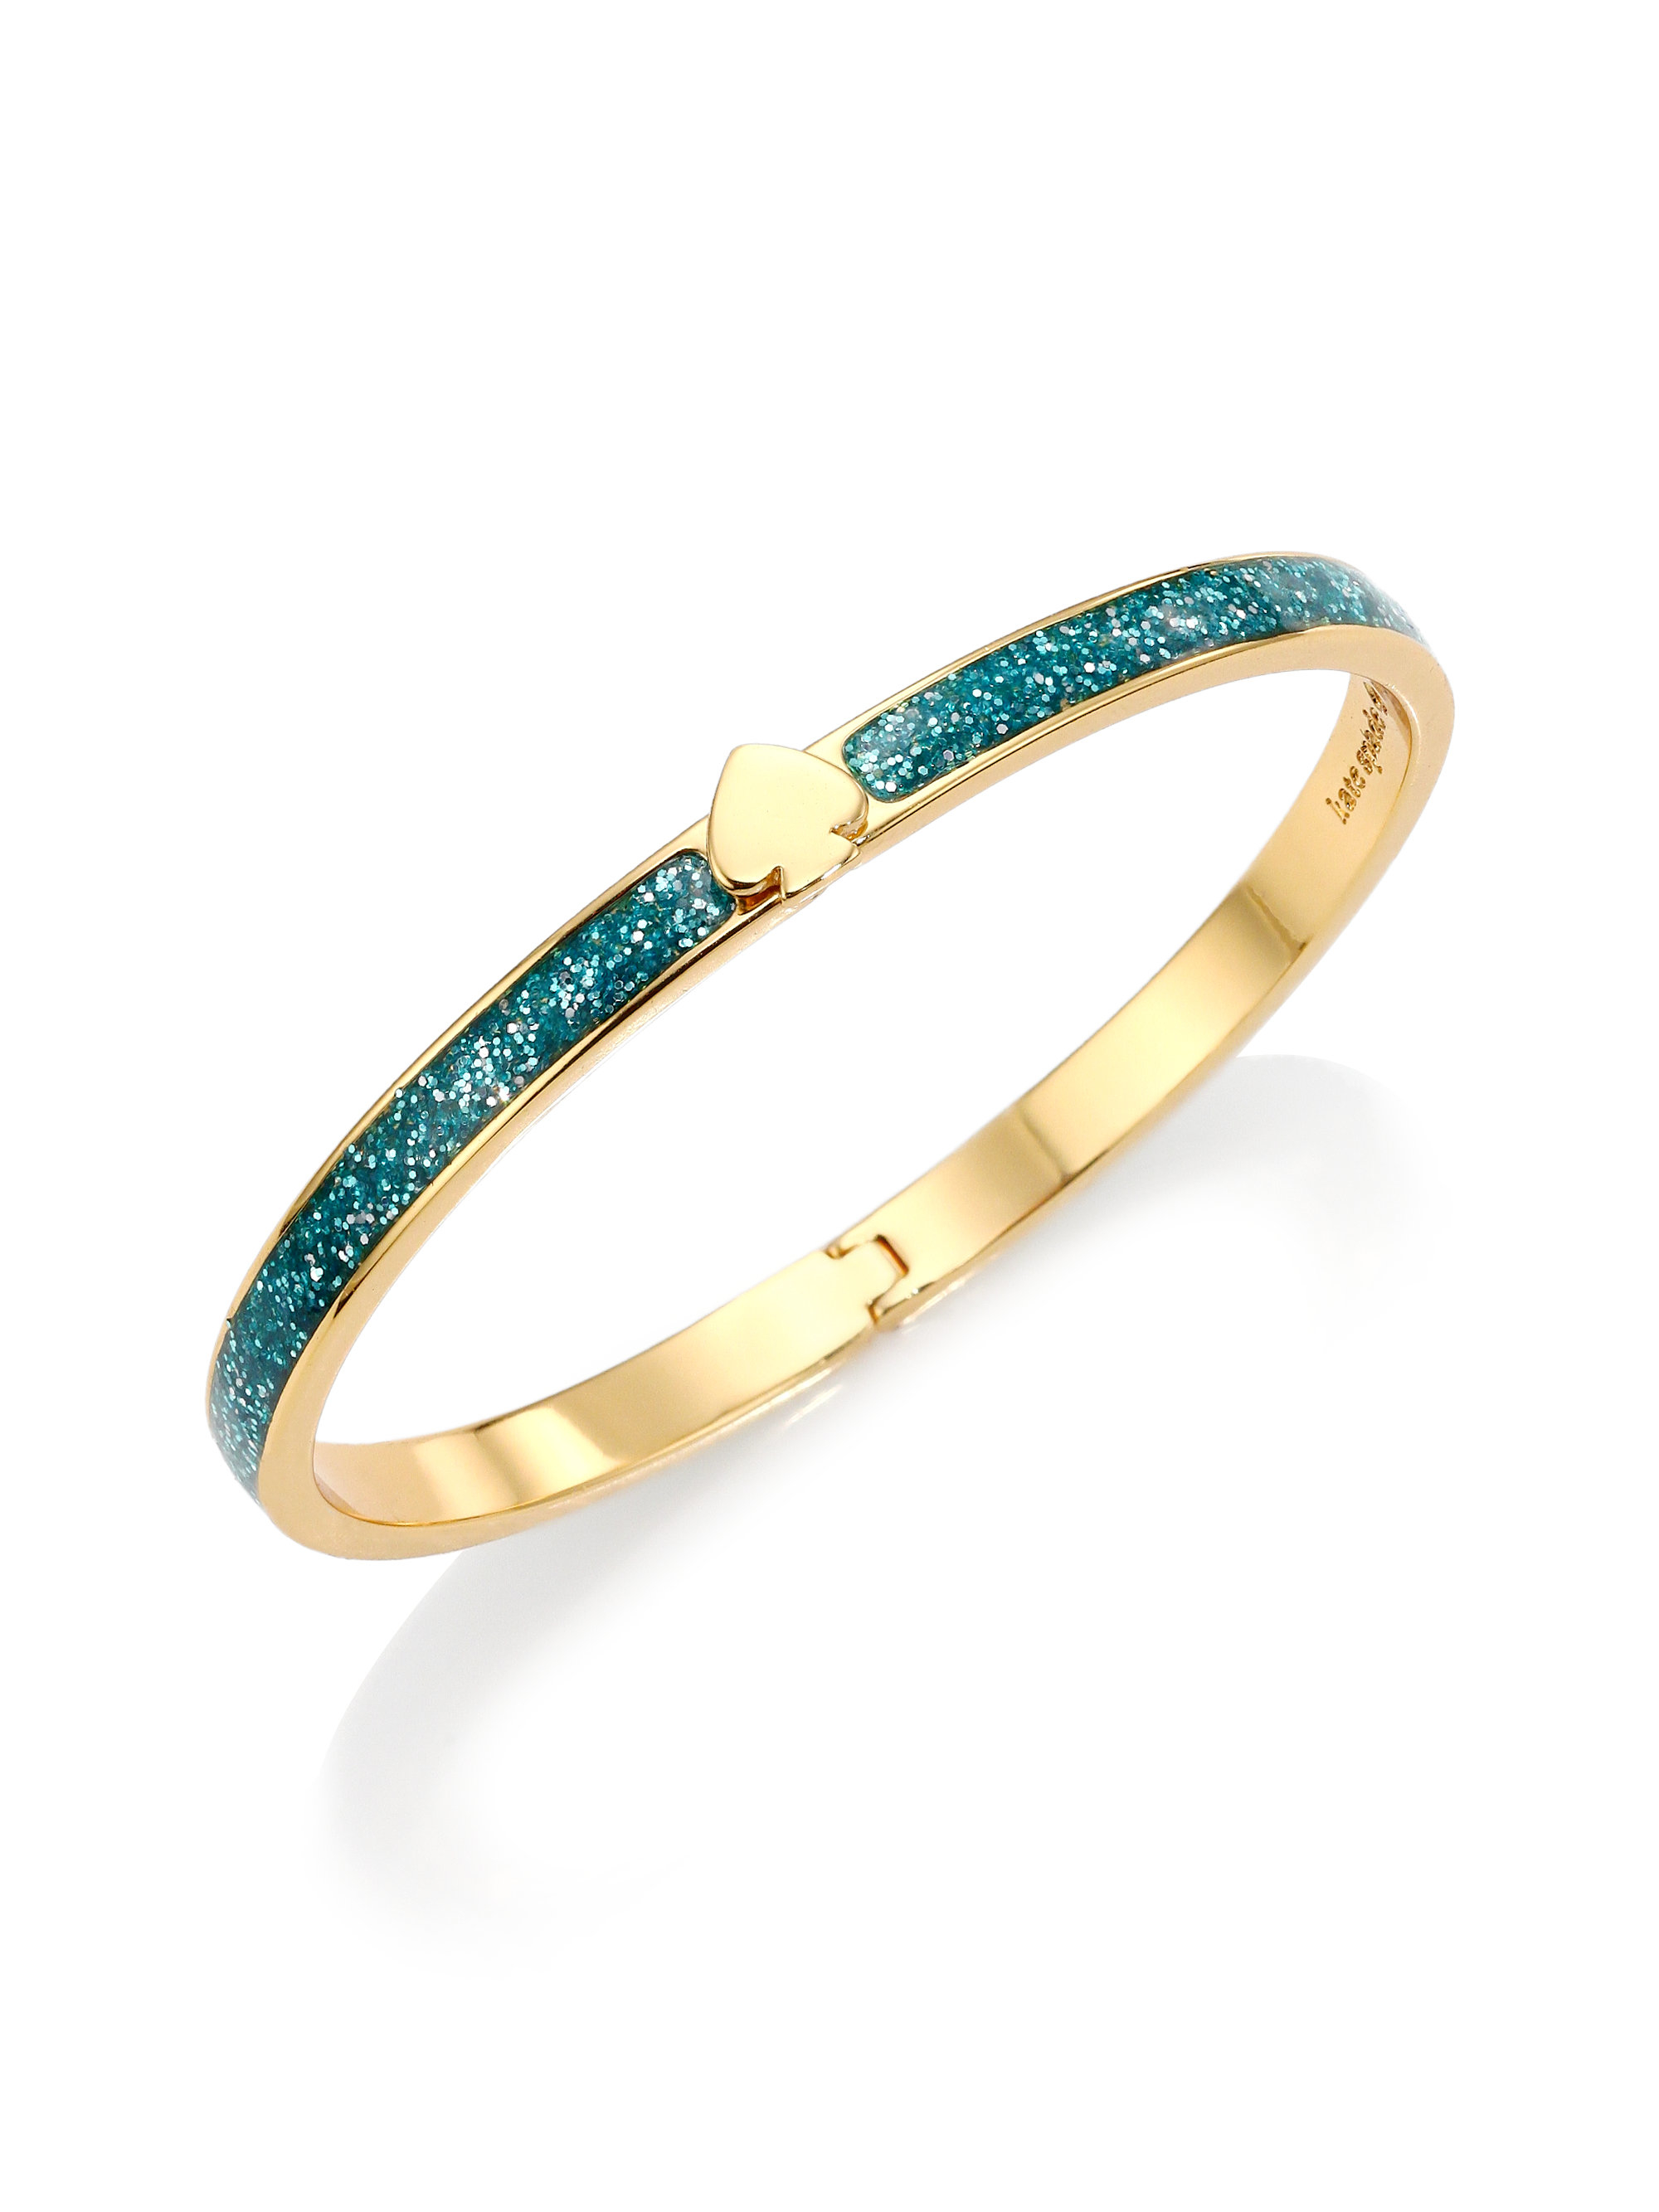 Lyst - Kate Spade New York Spade Glitter Enamel Bangle Bracelet/blue in